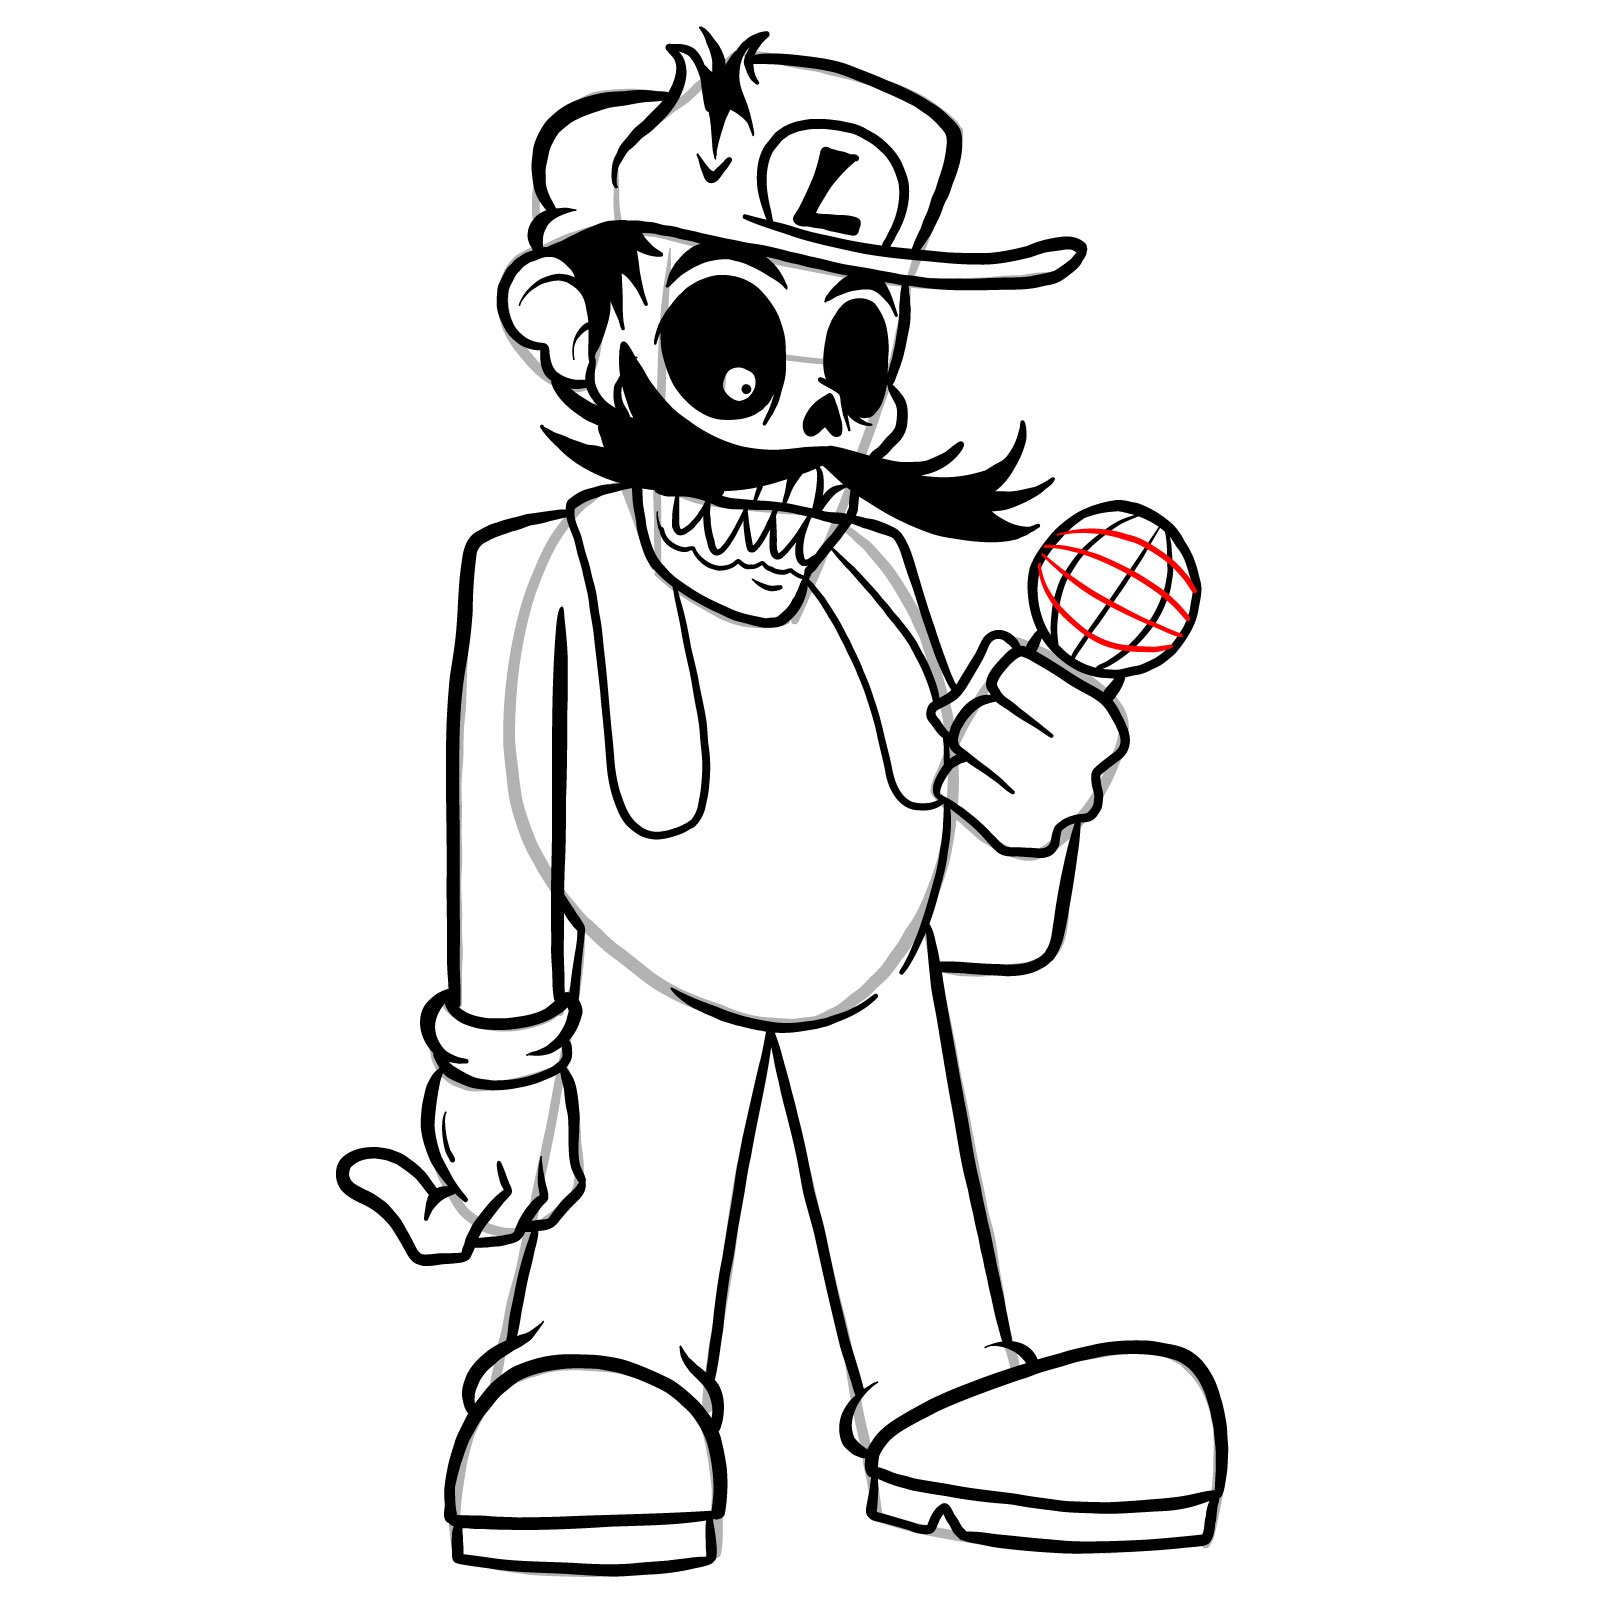 How to draw I HATE YOU Luigi - step 32